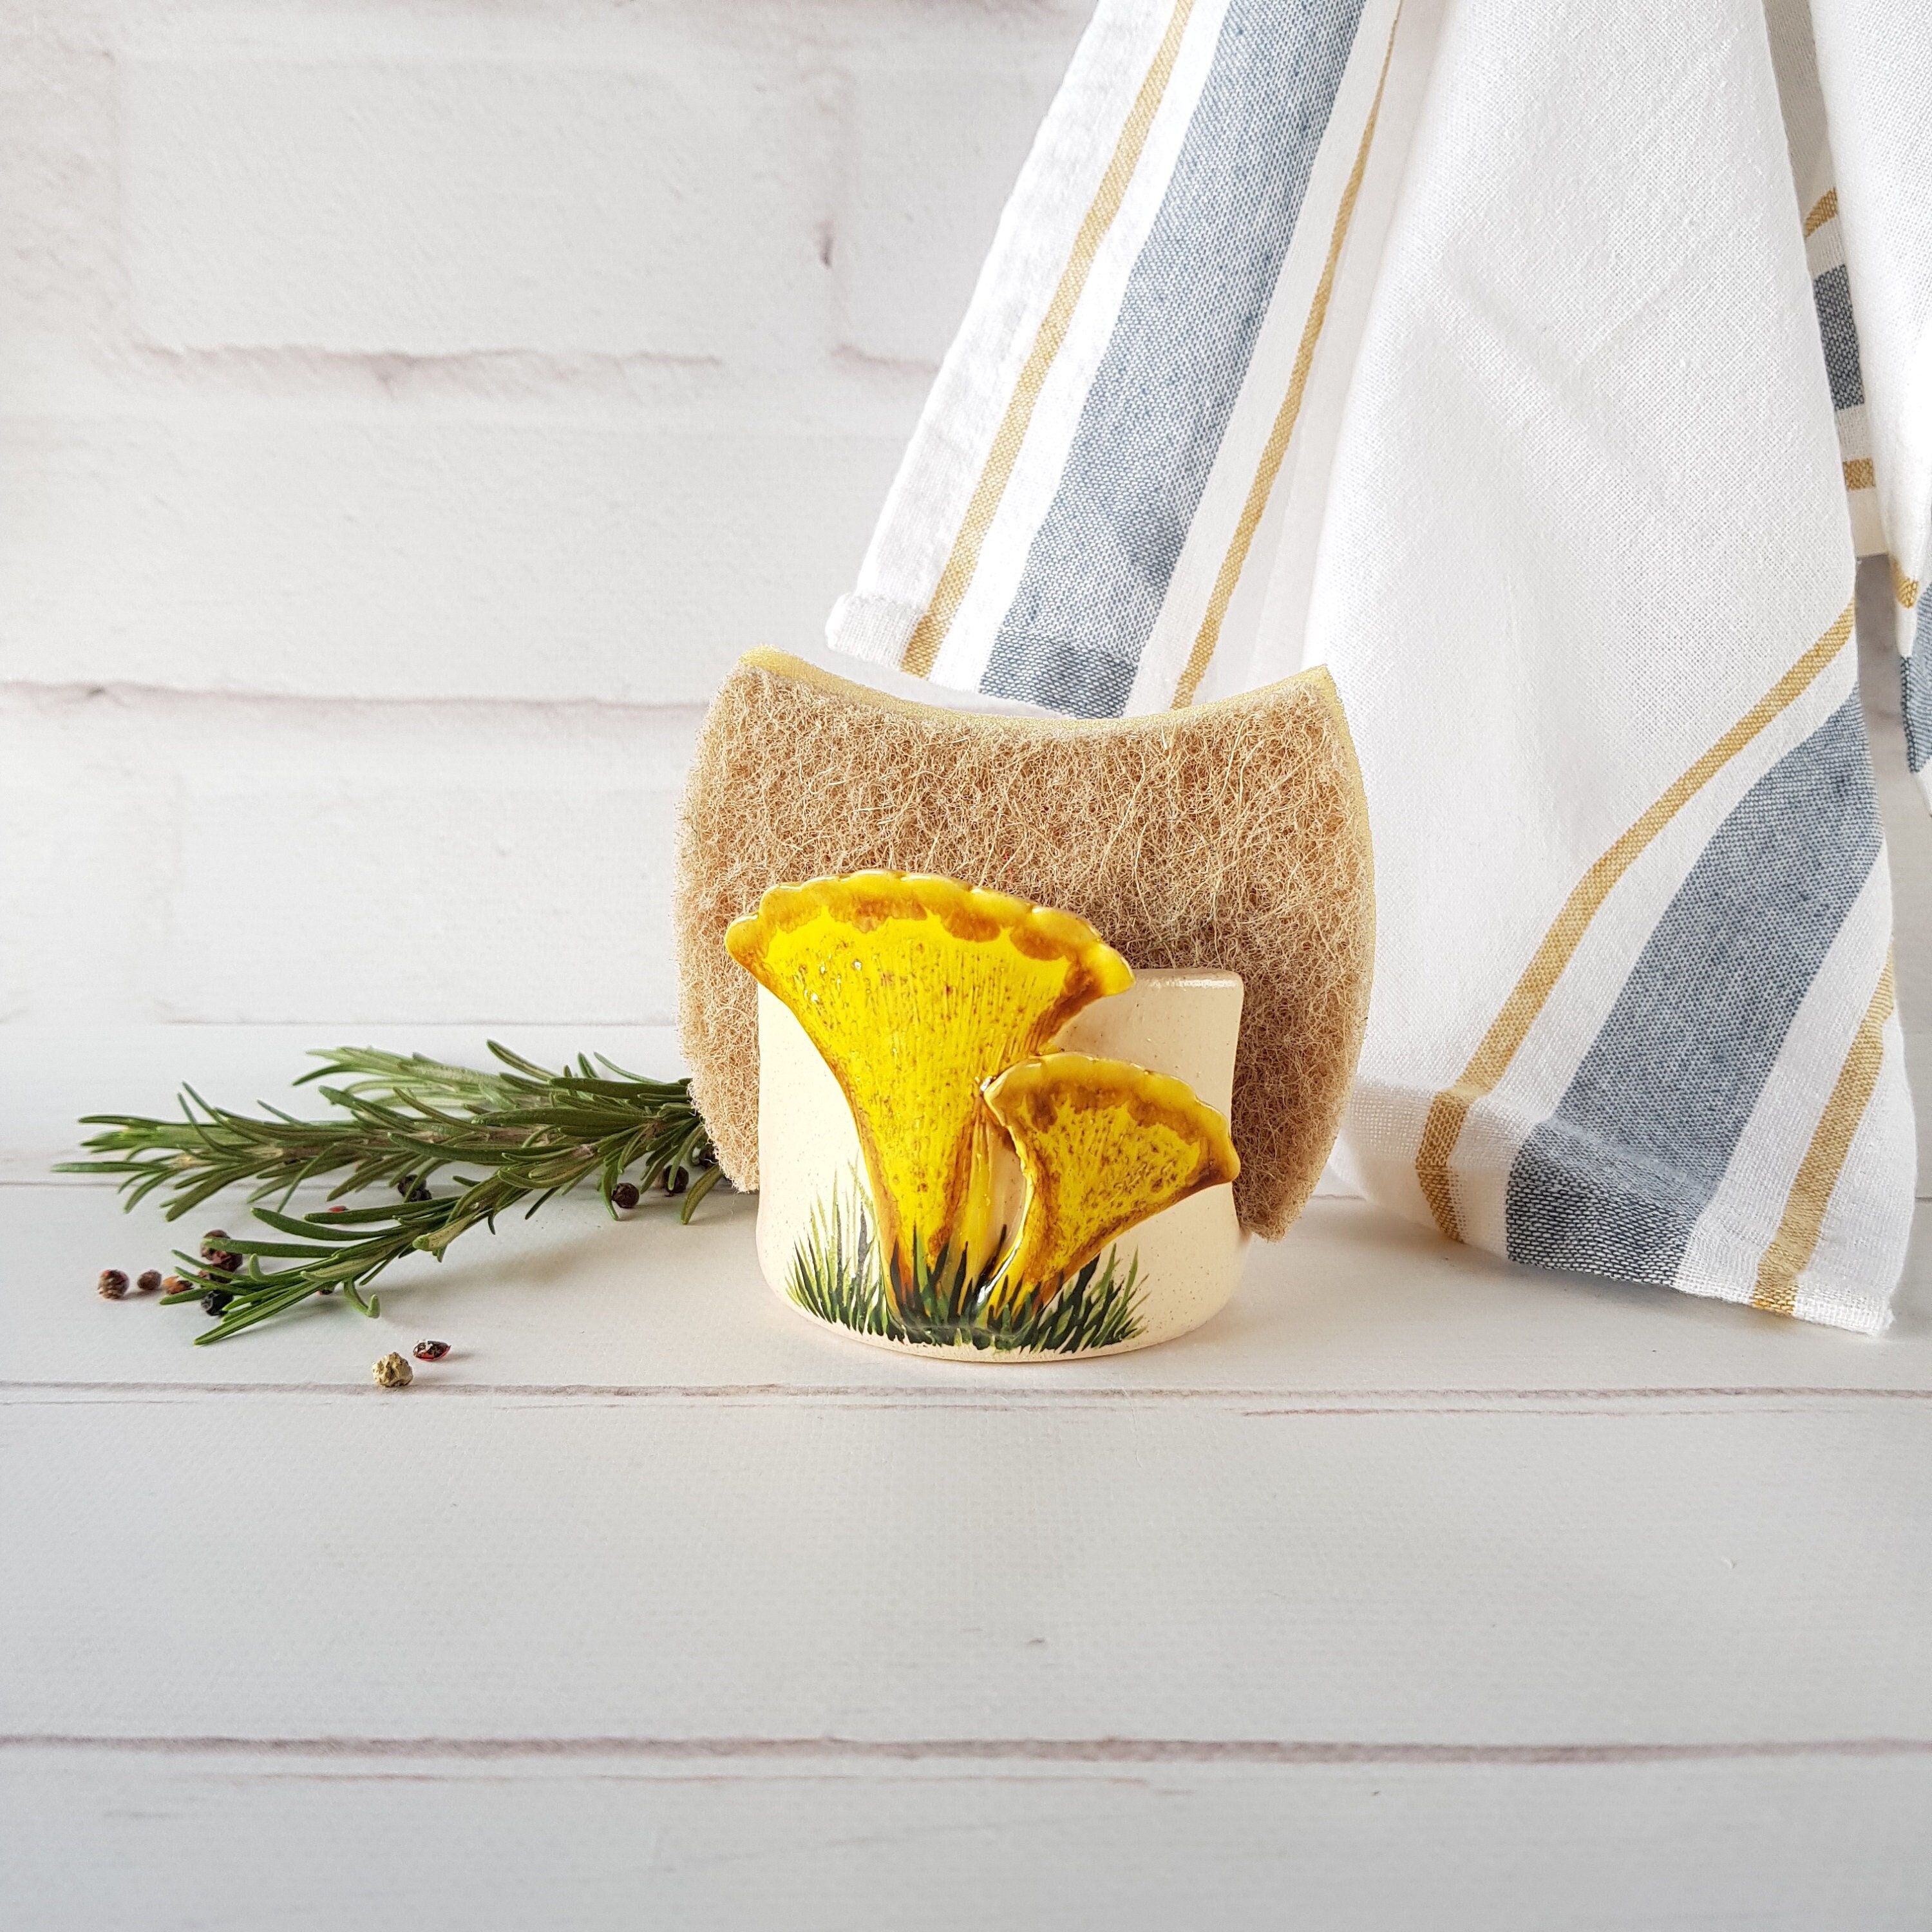 15 Kitchen Sponger Holder Ideas Keep Your Sponge Dry and Kitchen Organized  - Design Swan